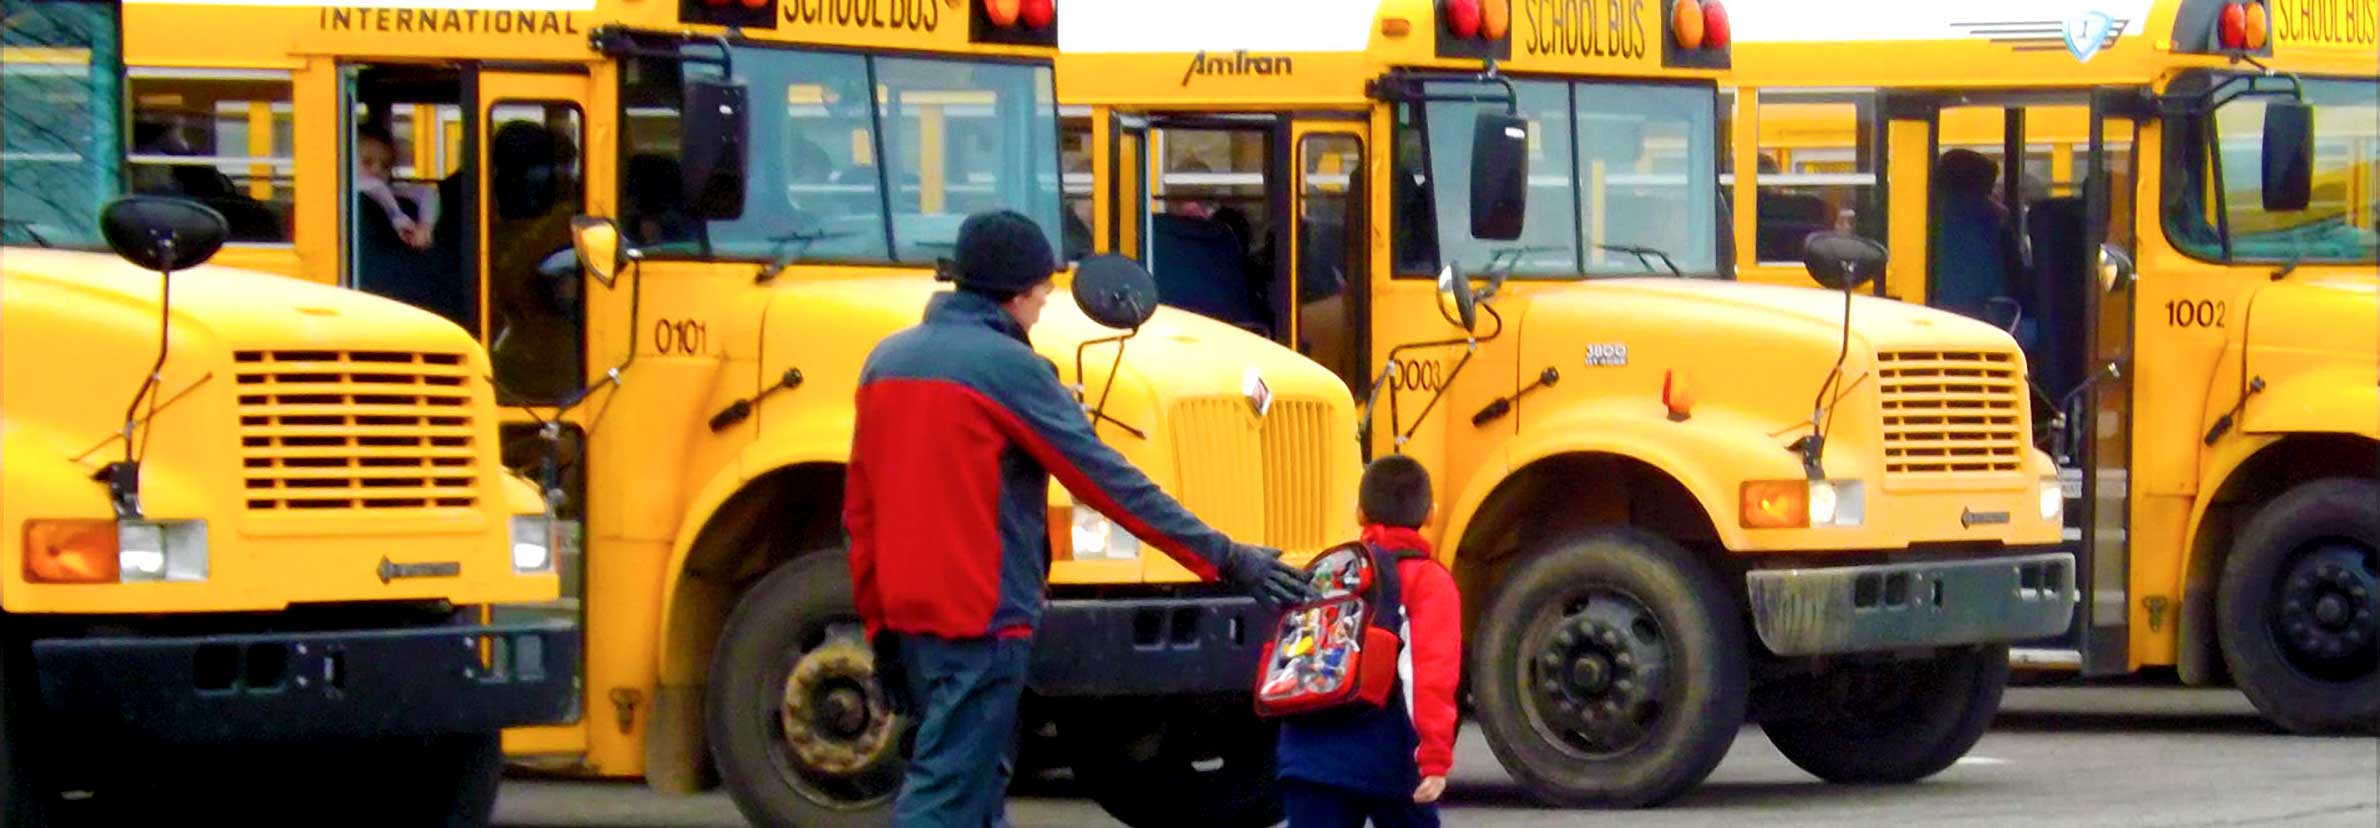 Teacher-Student walk to buses